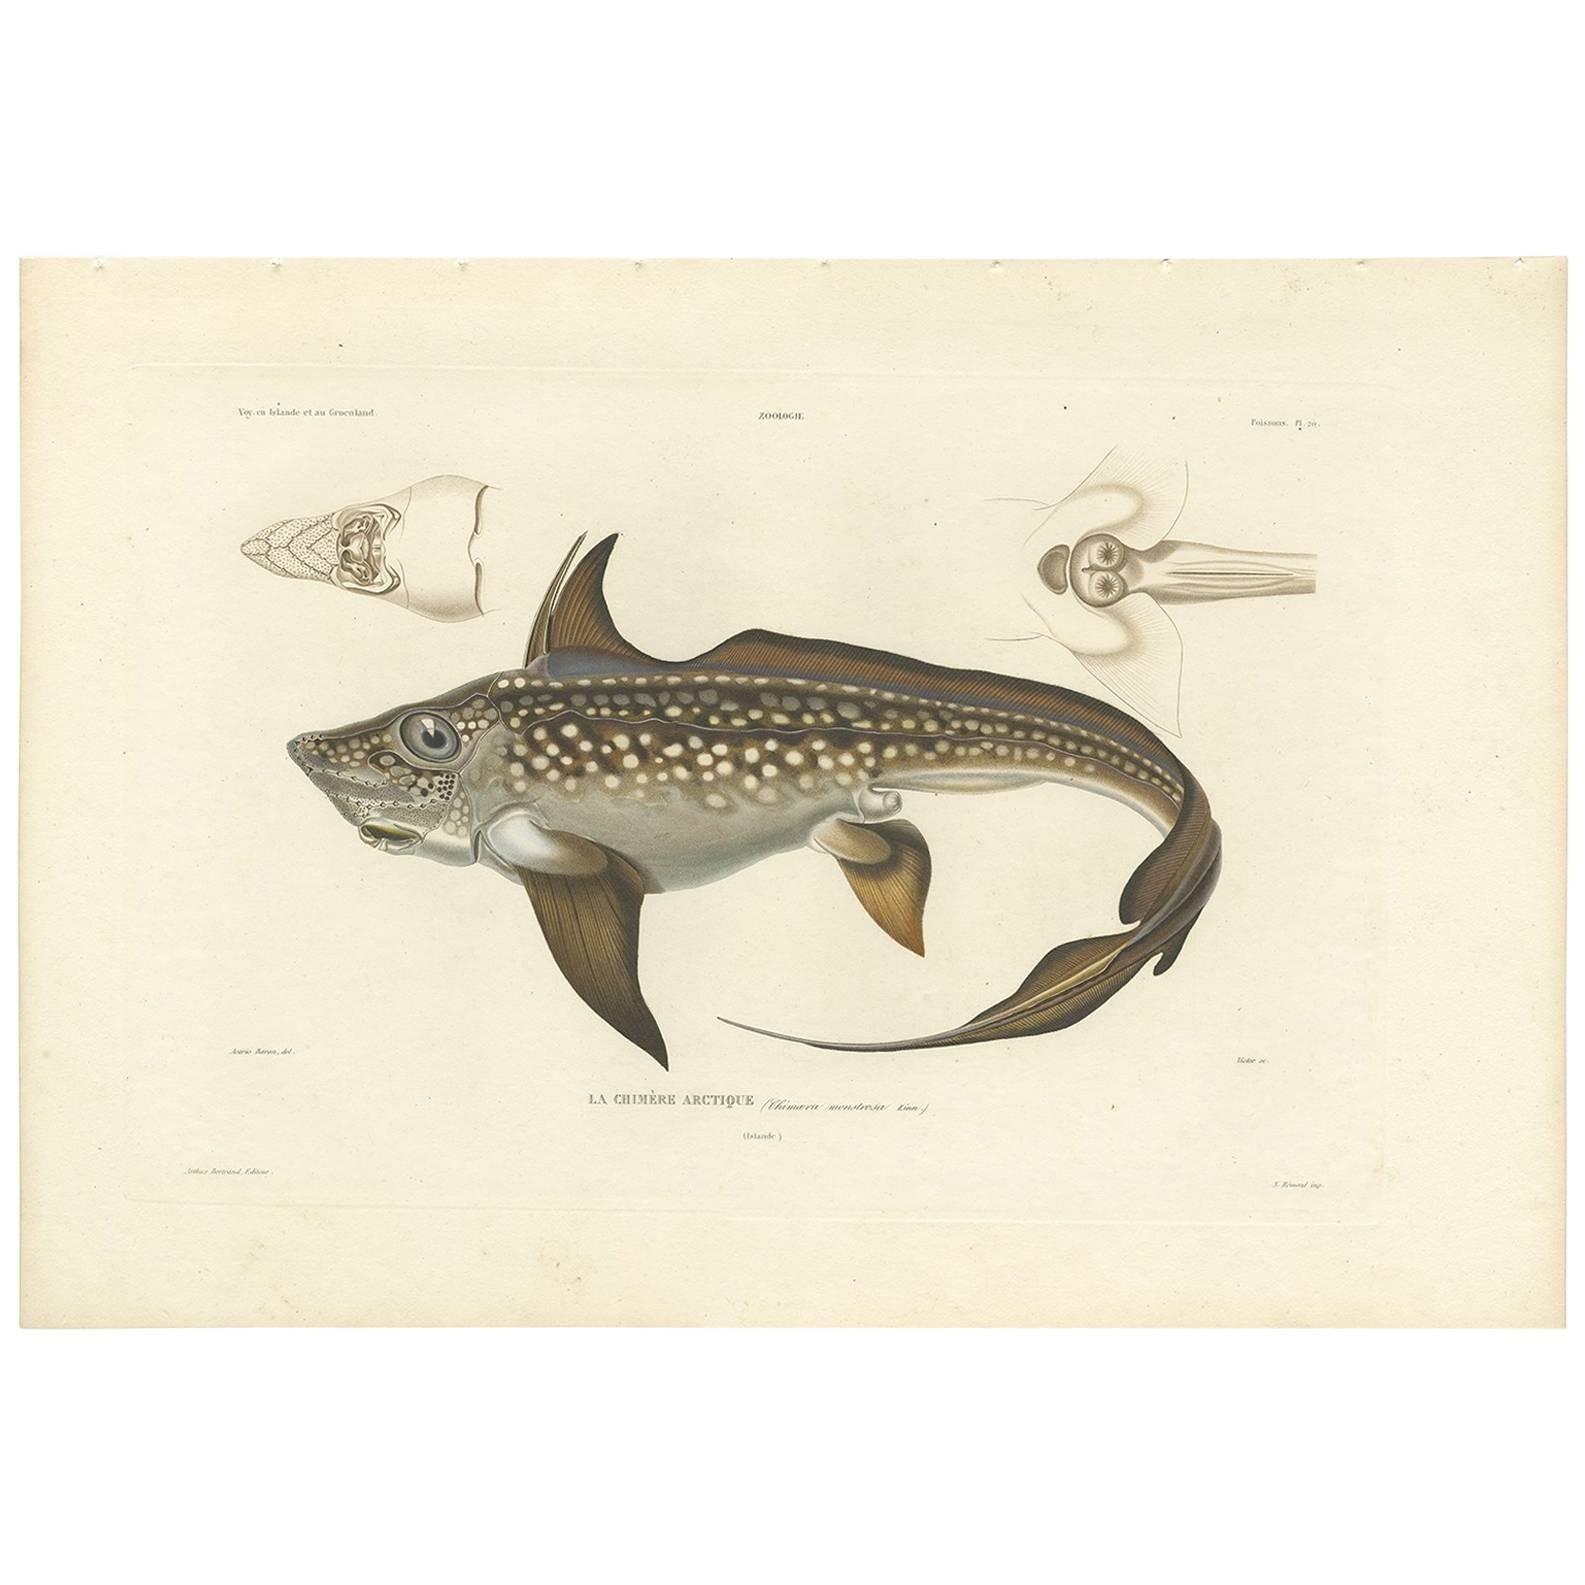 Antique Fish Print of the Rabbit Fish 'or Rat Fish' by M.P. Gaimard, 1842